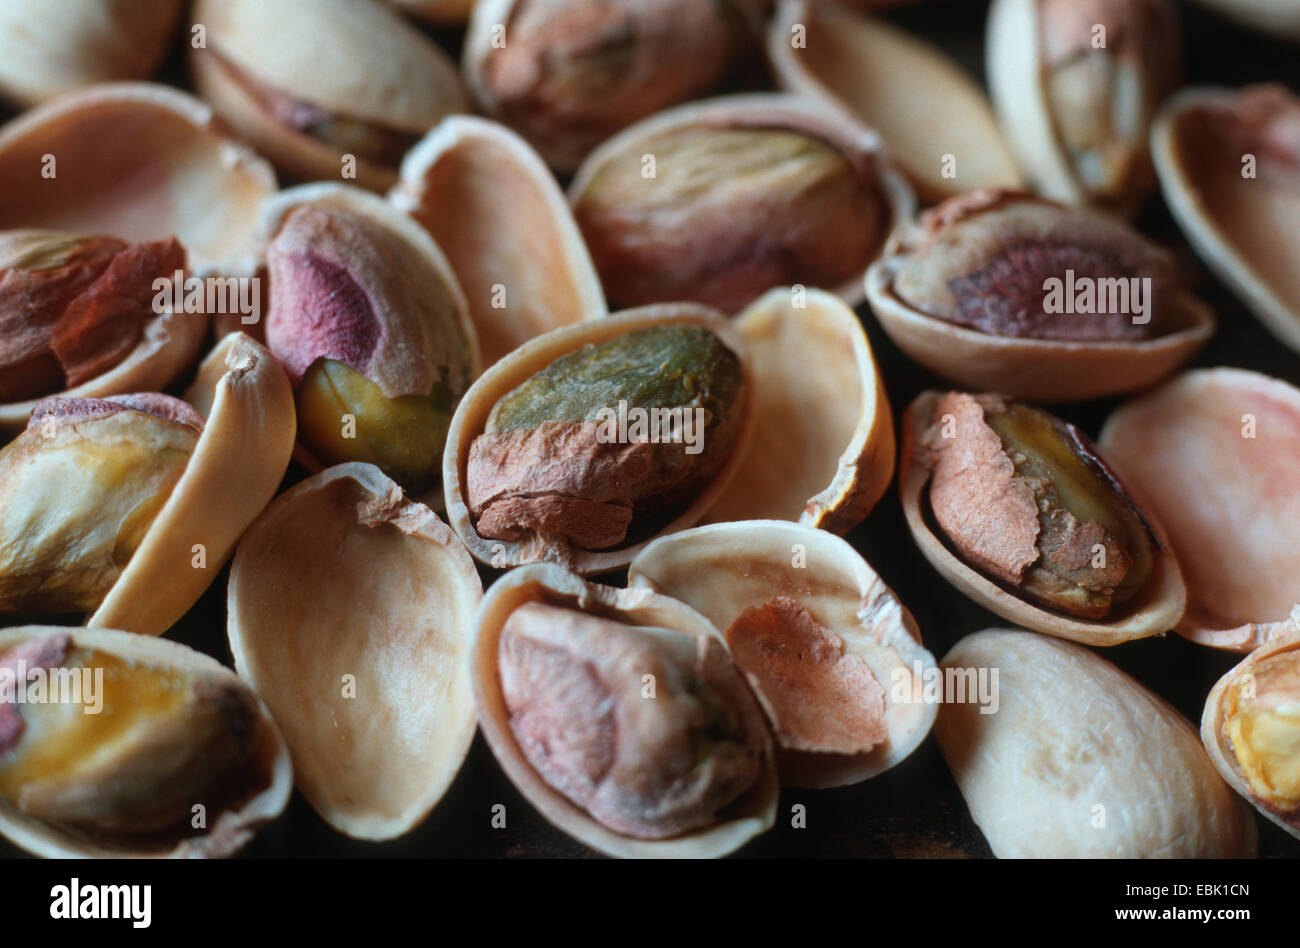 pistachio nut (Pistacia vera), mouldy pistachio nuts, damage by Aspergillus Stock Photo